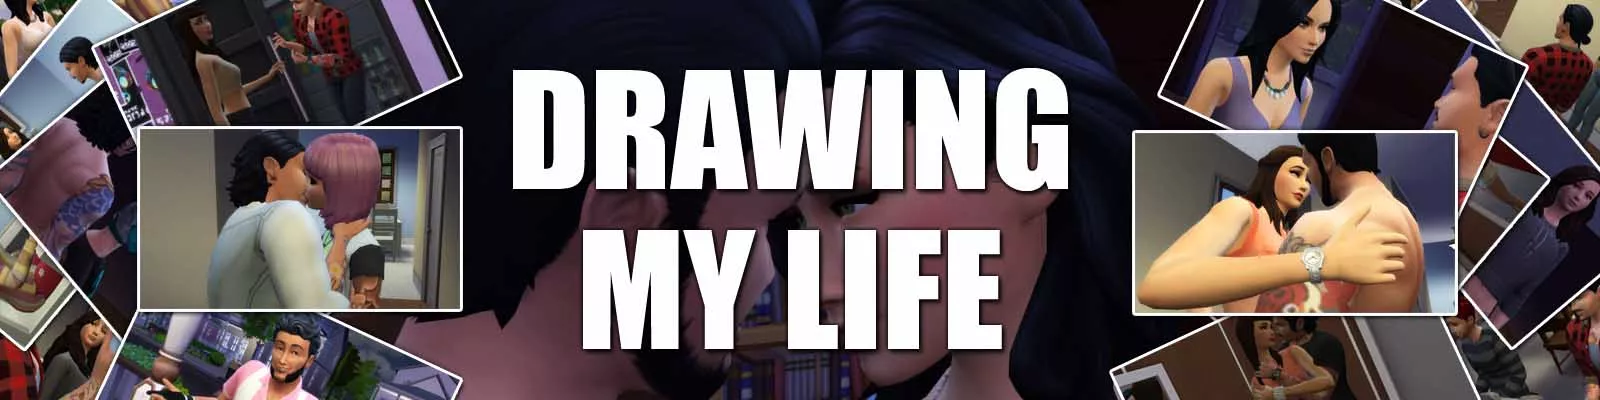 Drawing My Life 3d seks spel